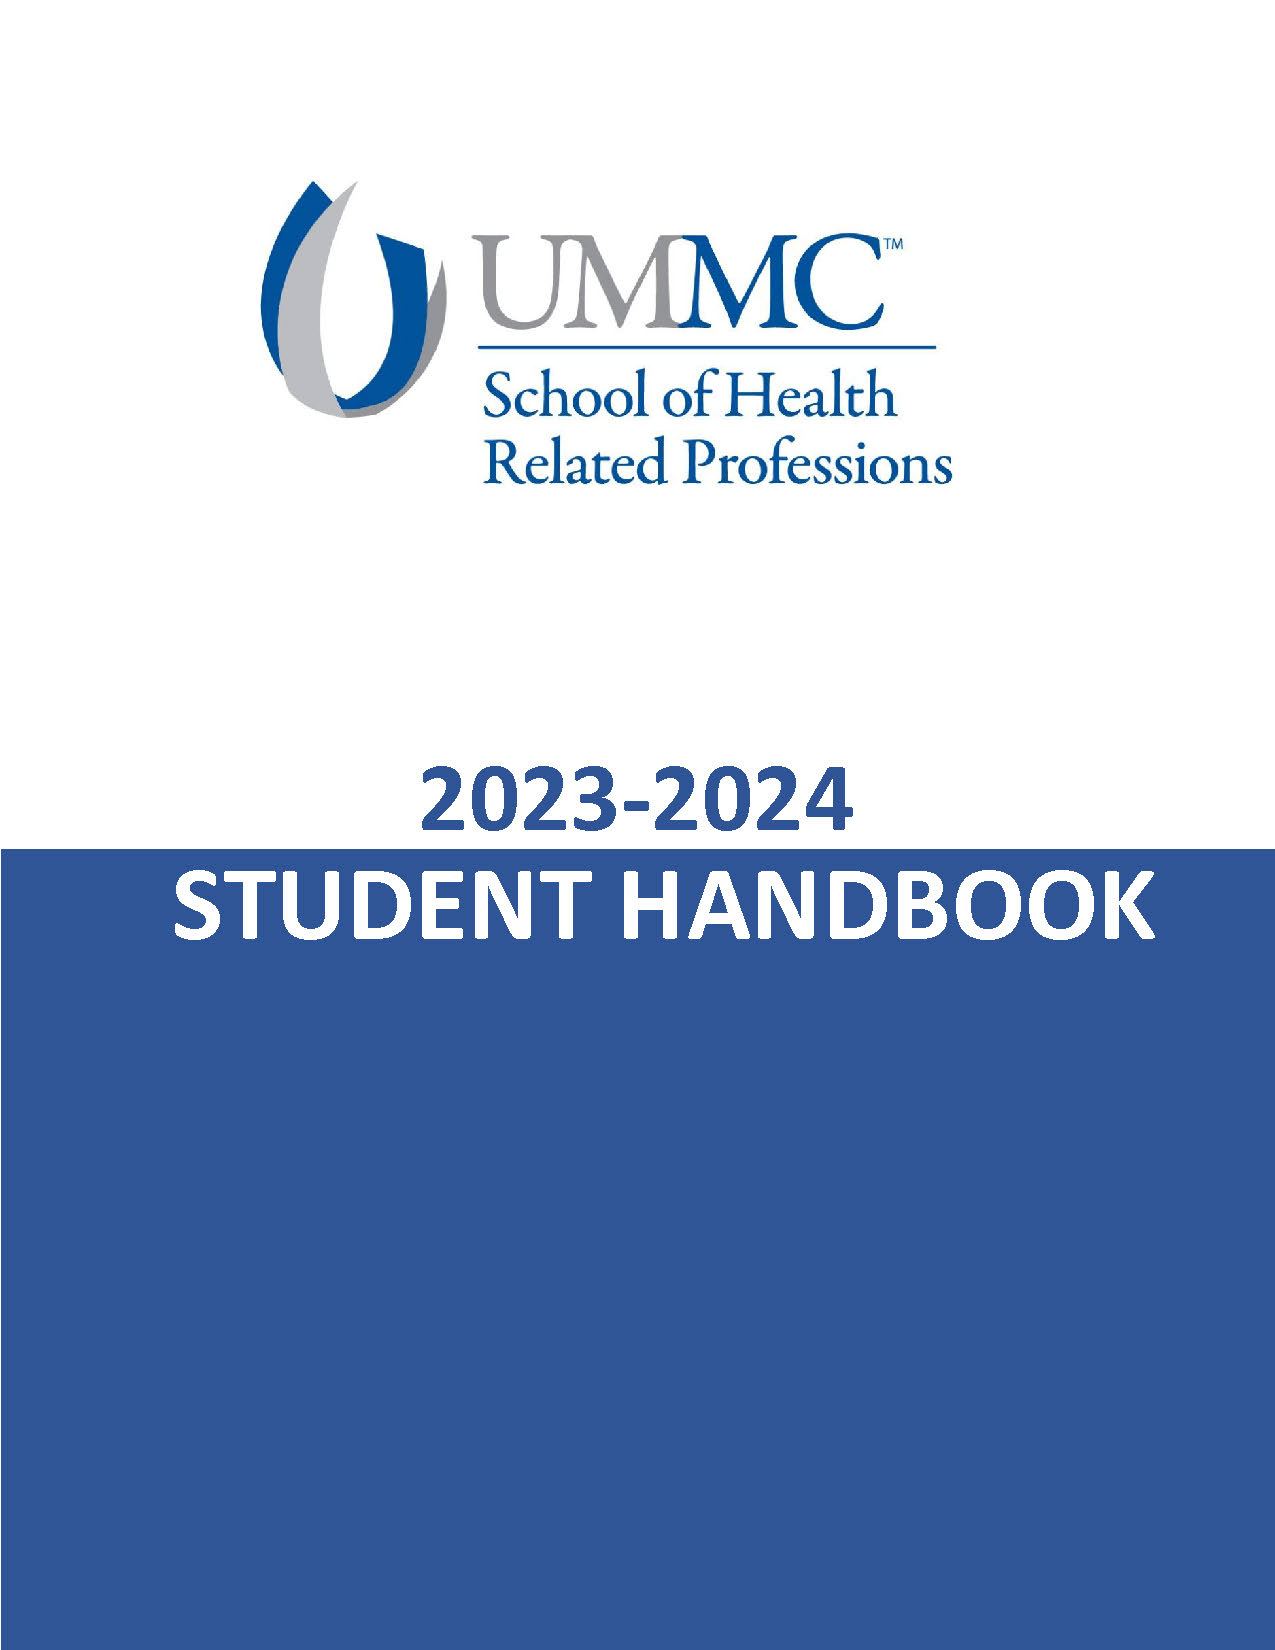 Handbook cover that reads UMMC School of Health Related Professions 2023-2024 Student Handbook